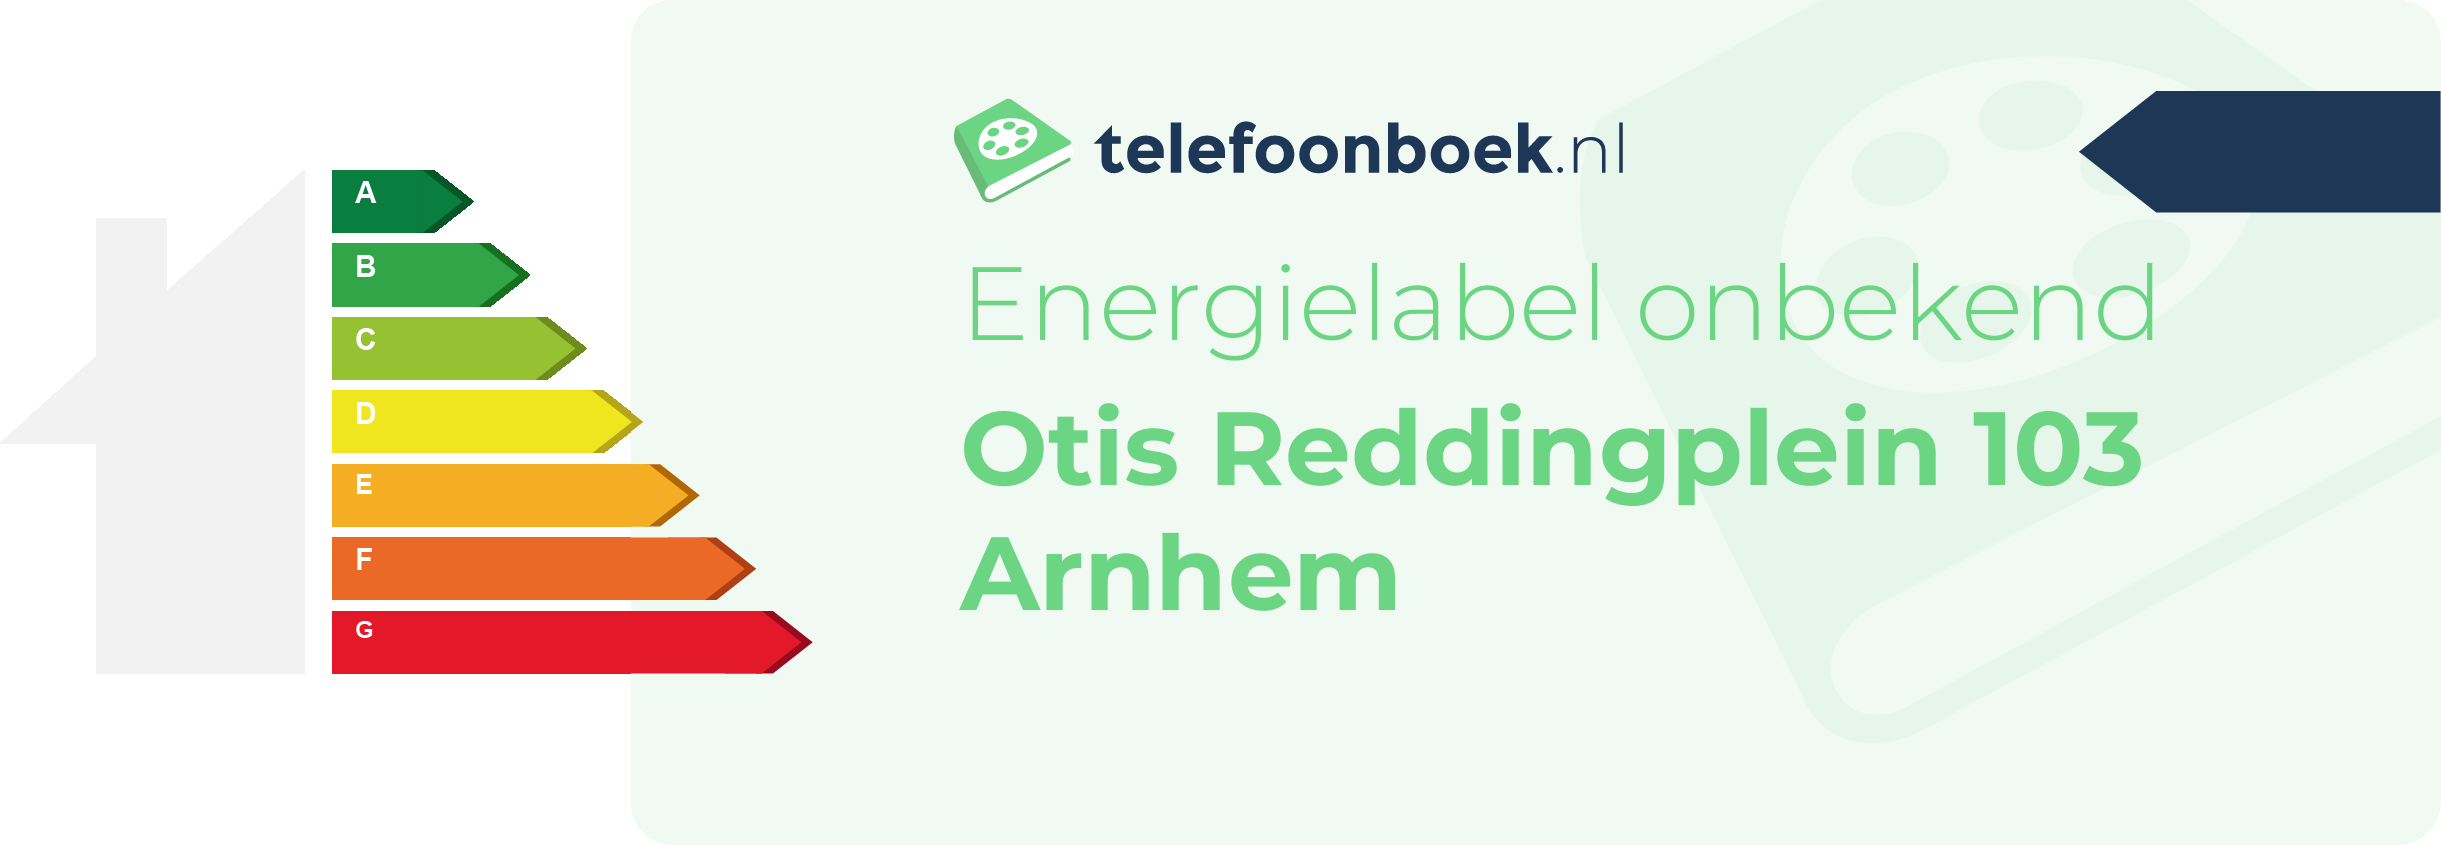 Energielabel Otis Reddingplein 103 Arnhem